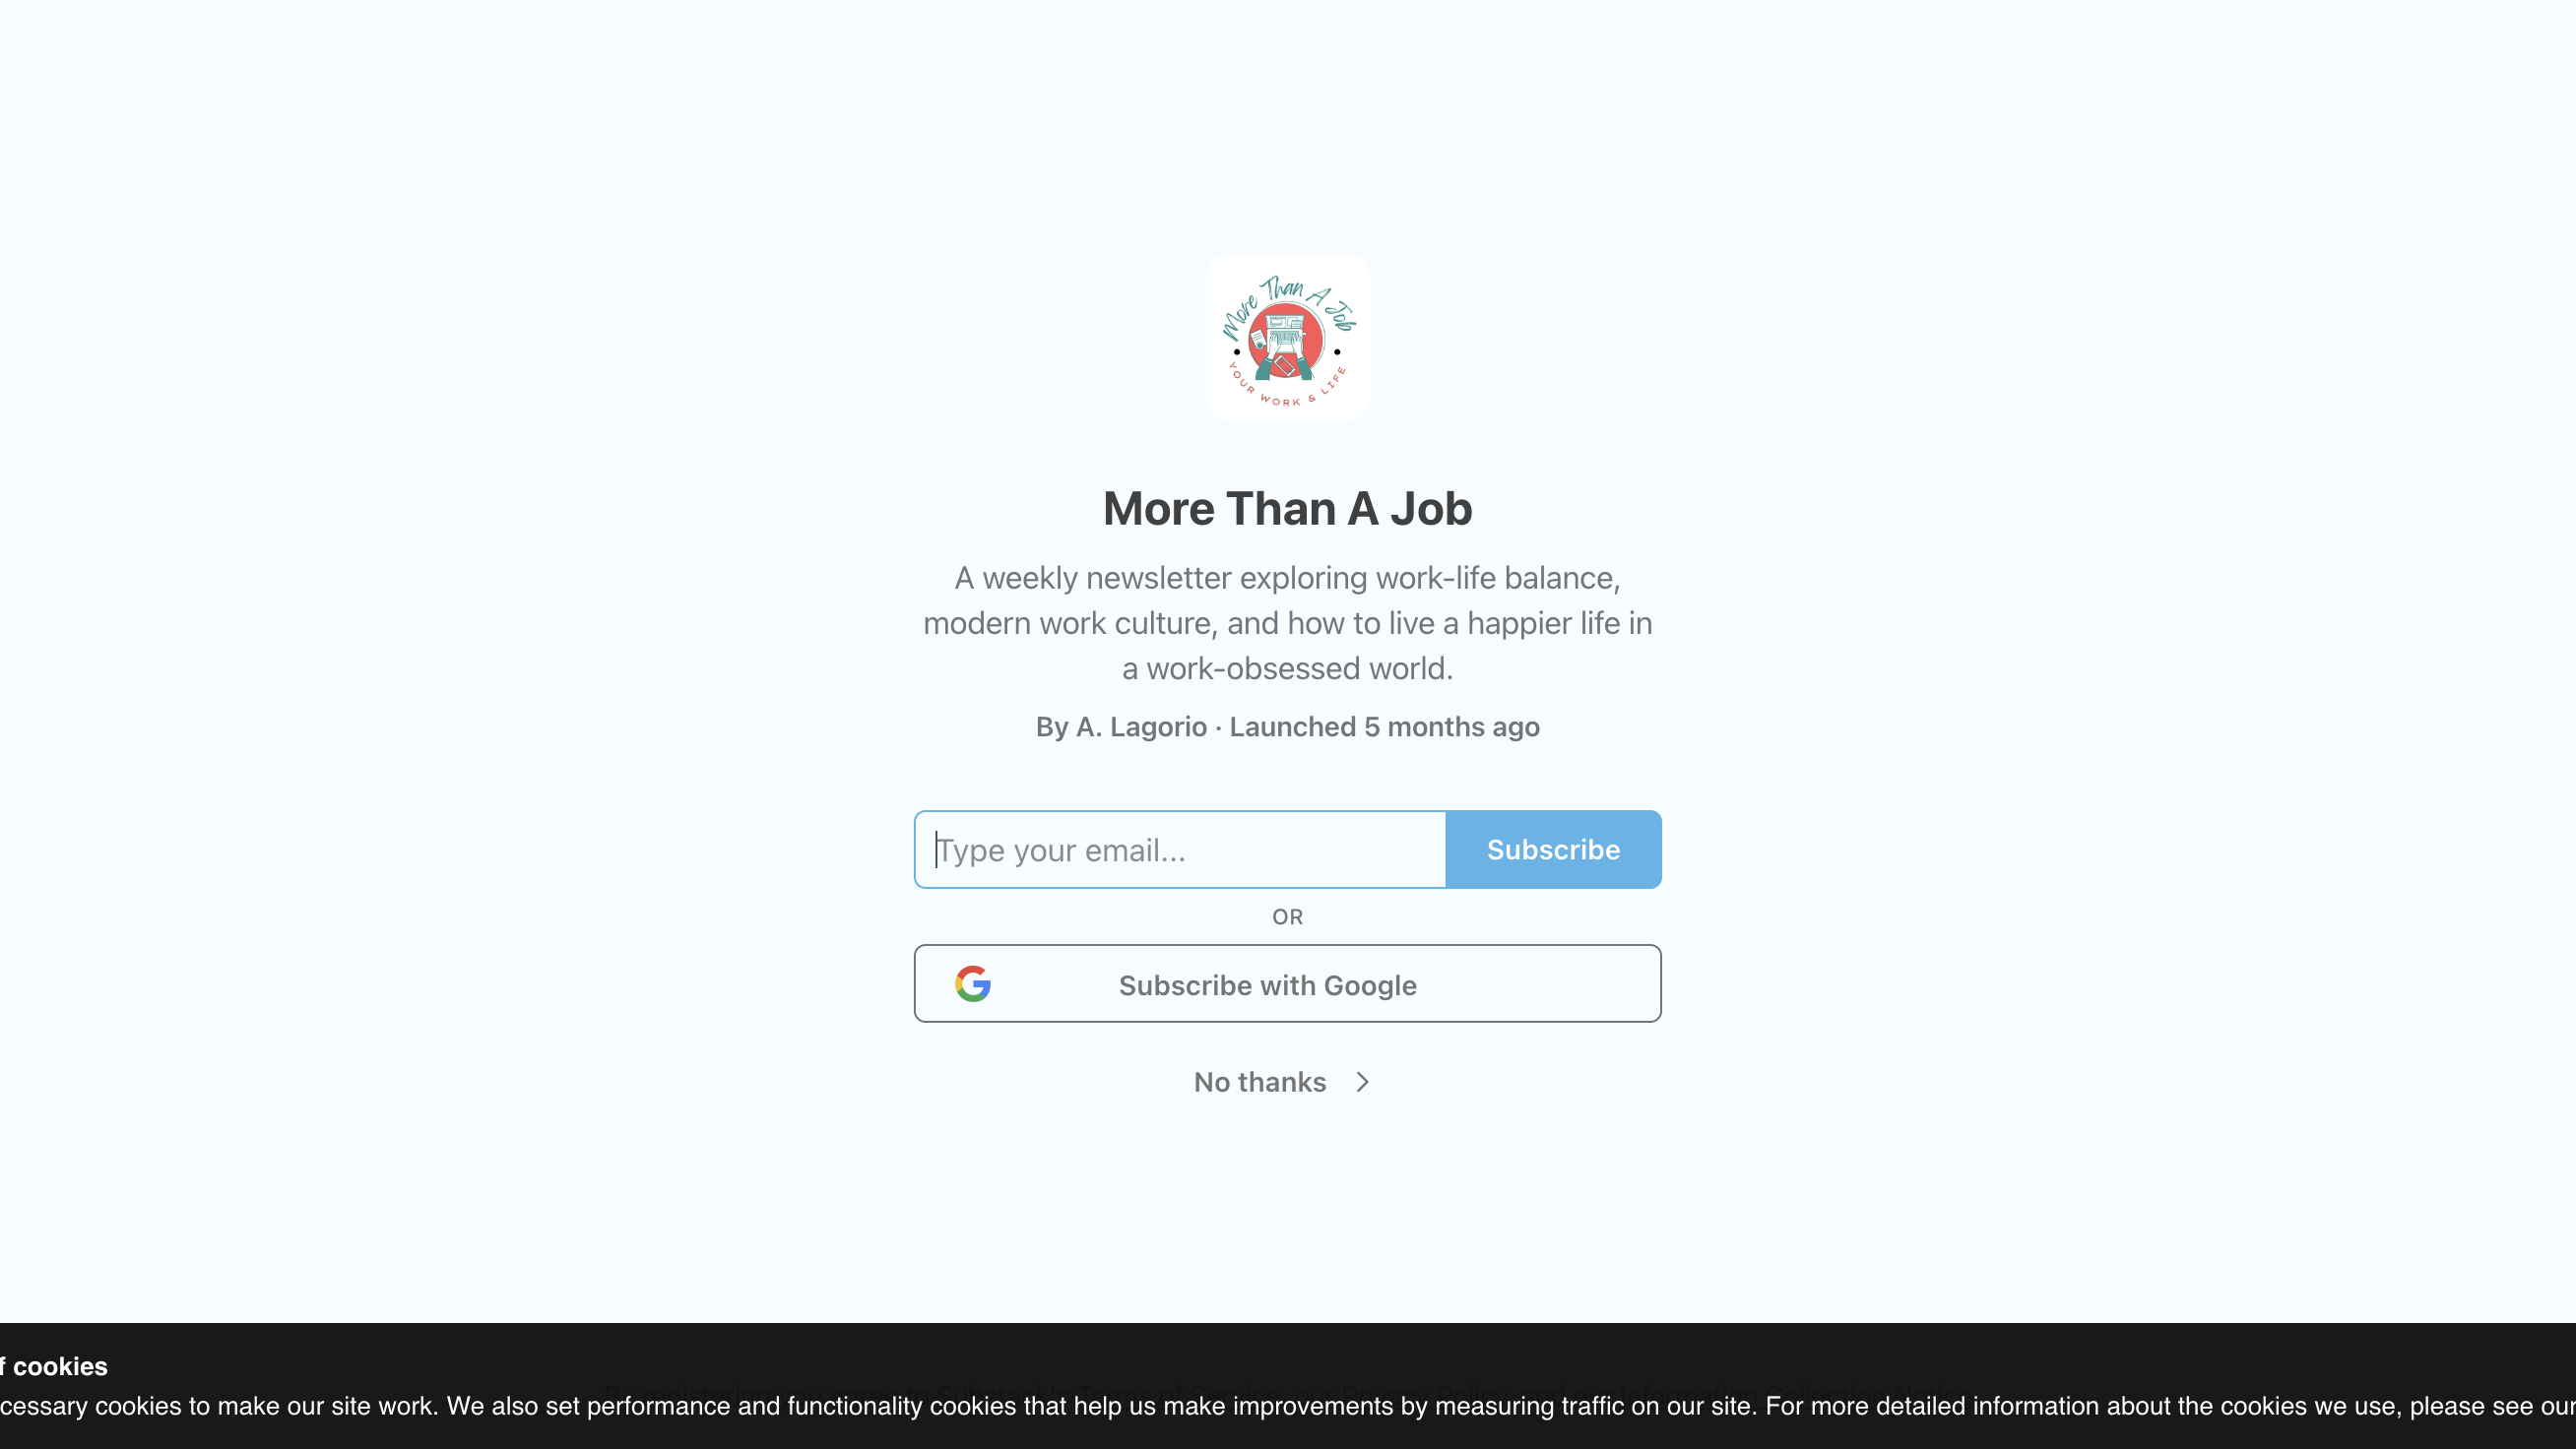 More Than A Job homepage